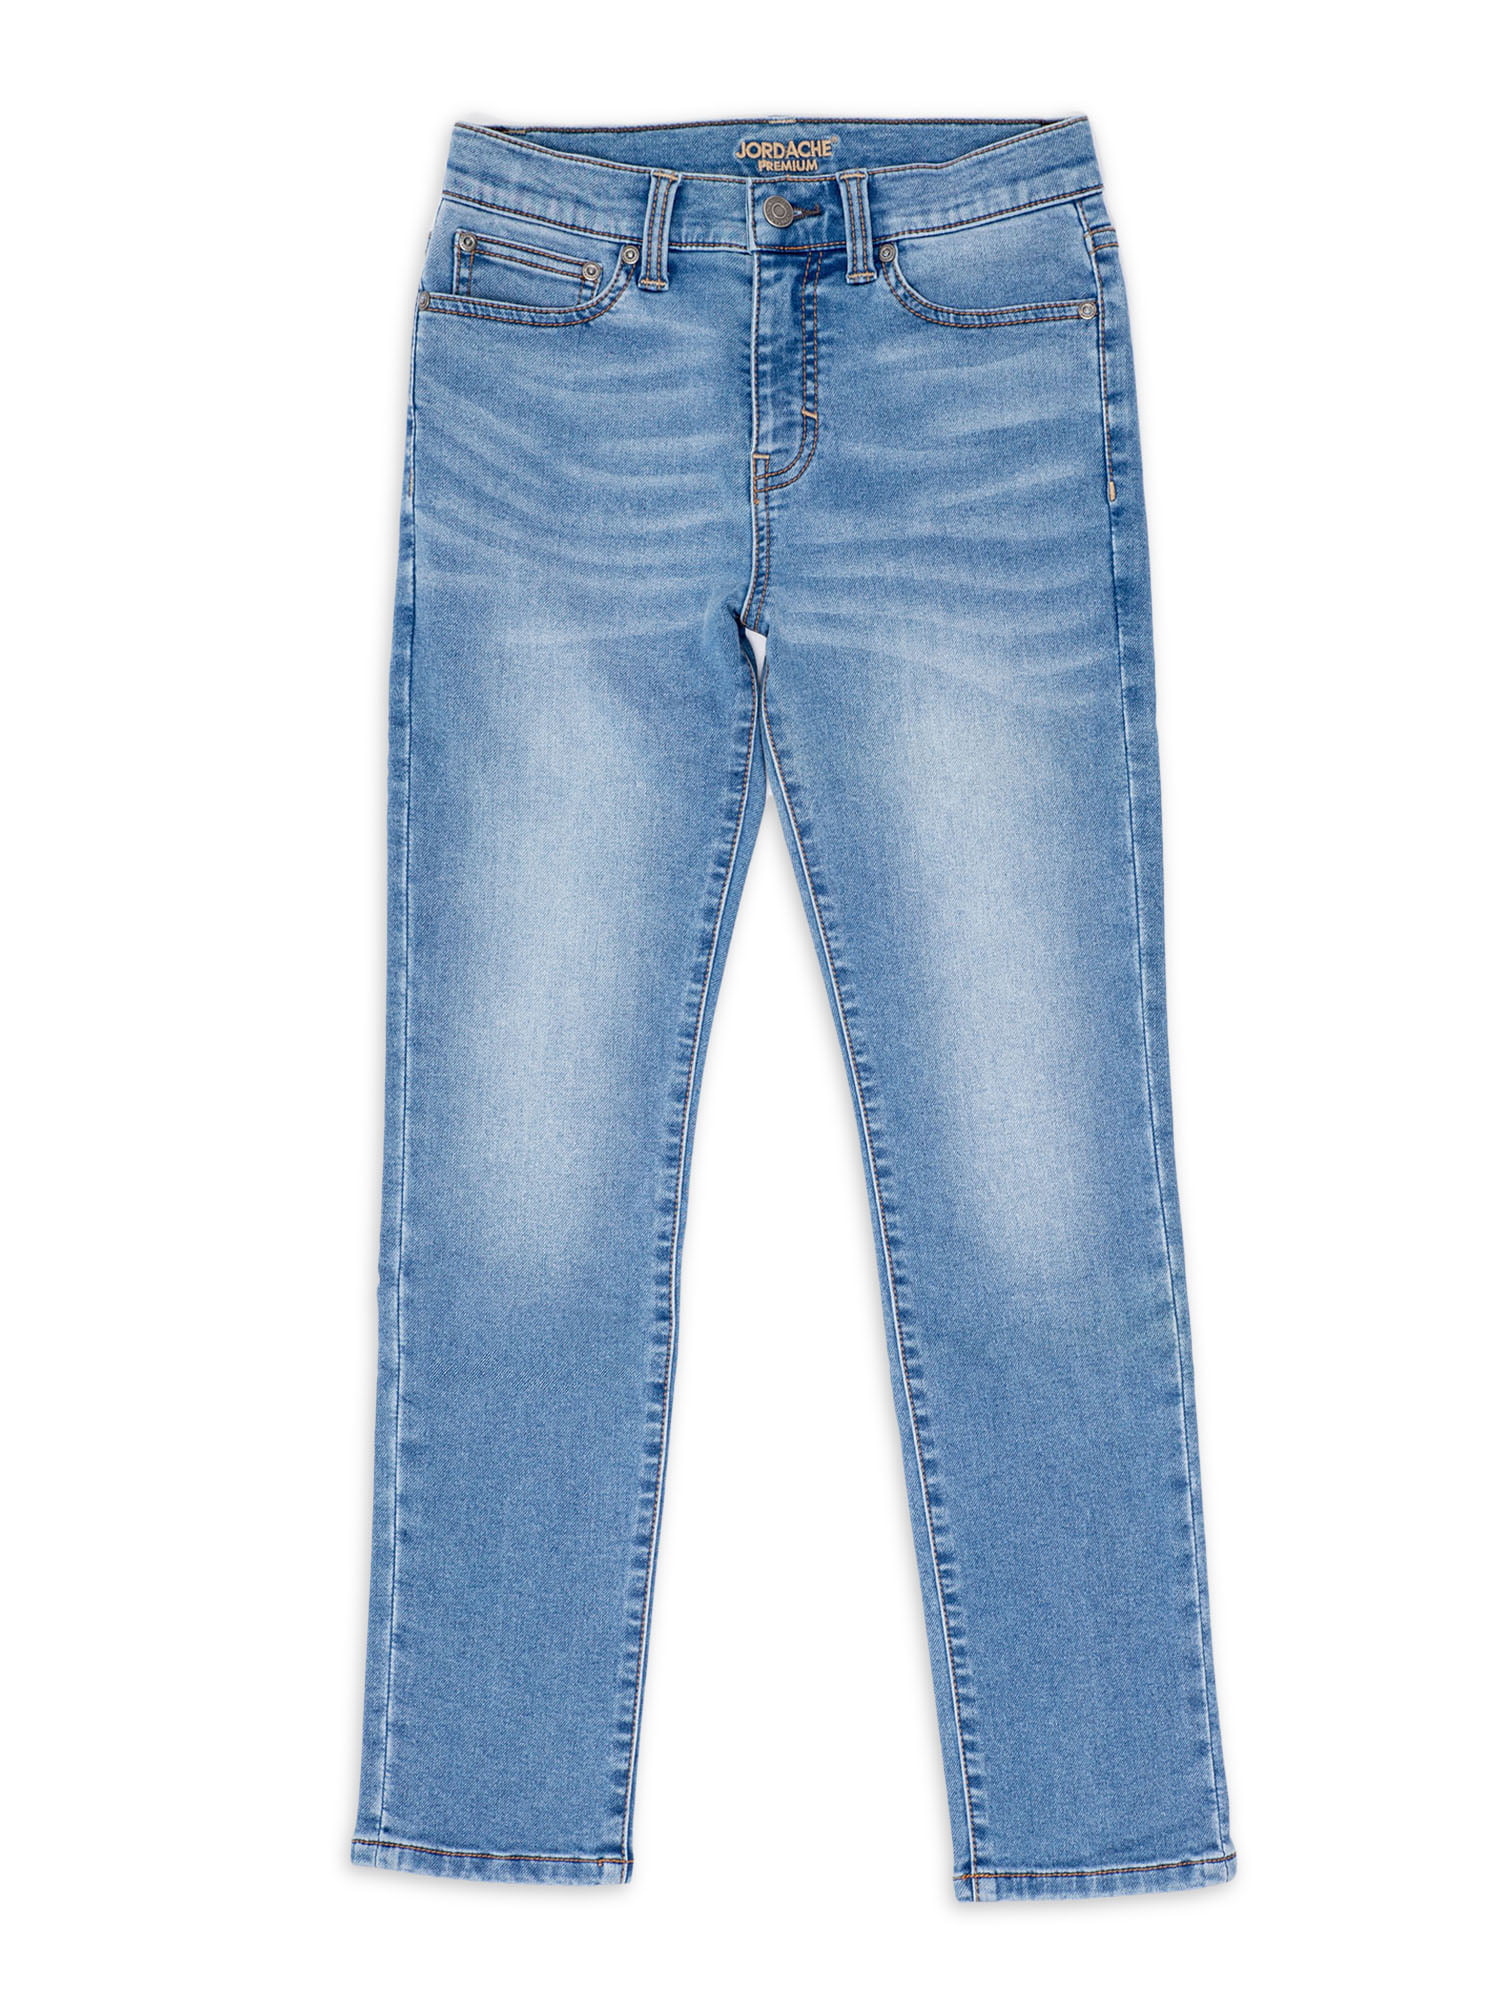 Jordache - Jordache Boys Knit Denim Jeans, Sizes 4-18 & Husky - Walmart ...